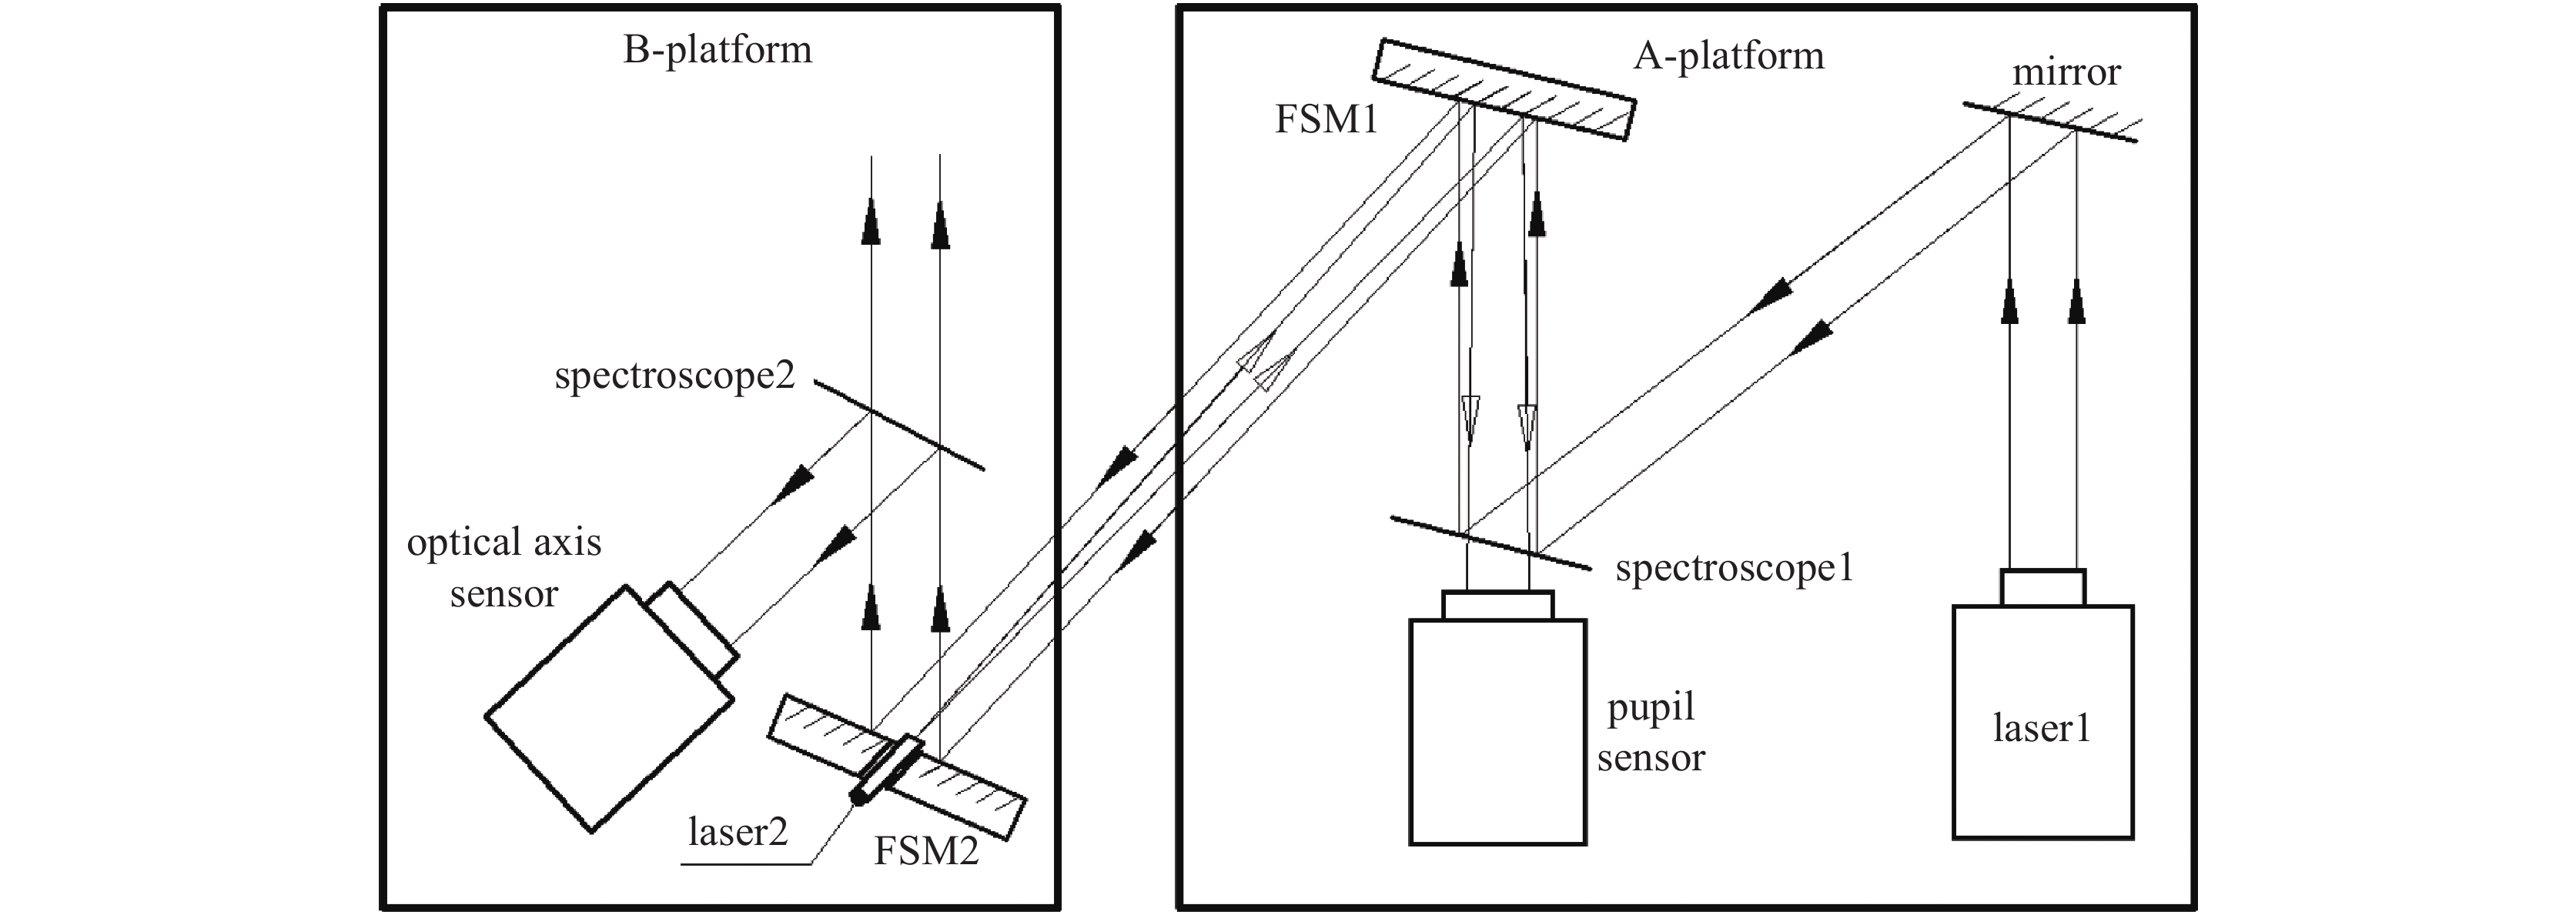 Schematic diagram of beam coupling transmission between platforms